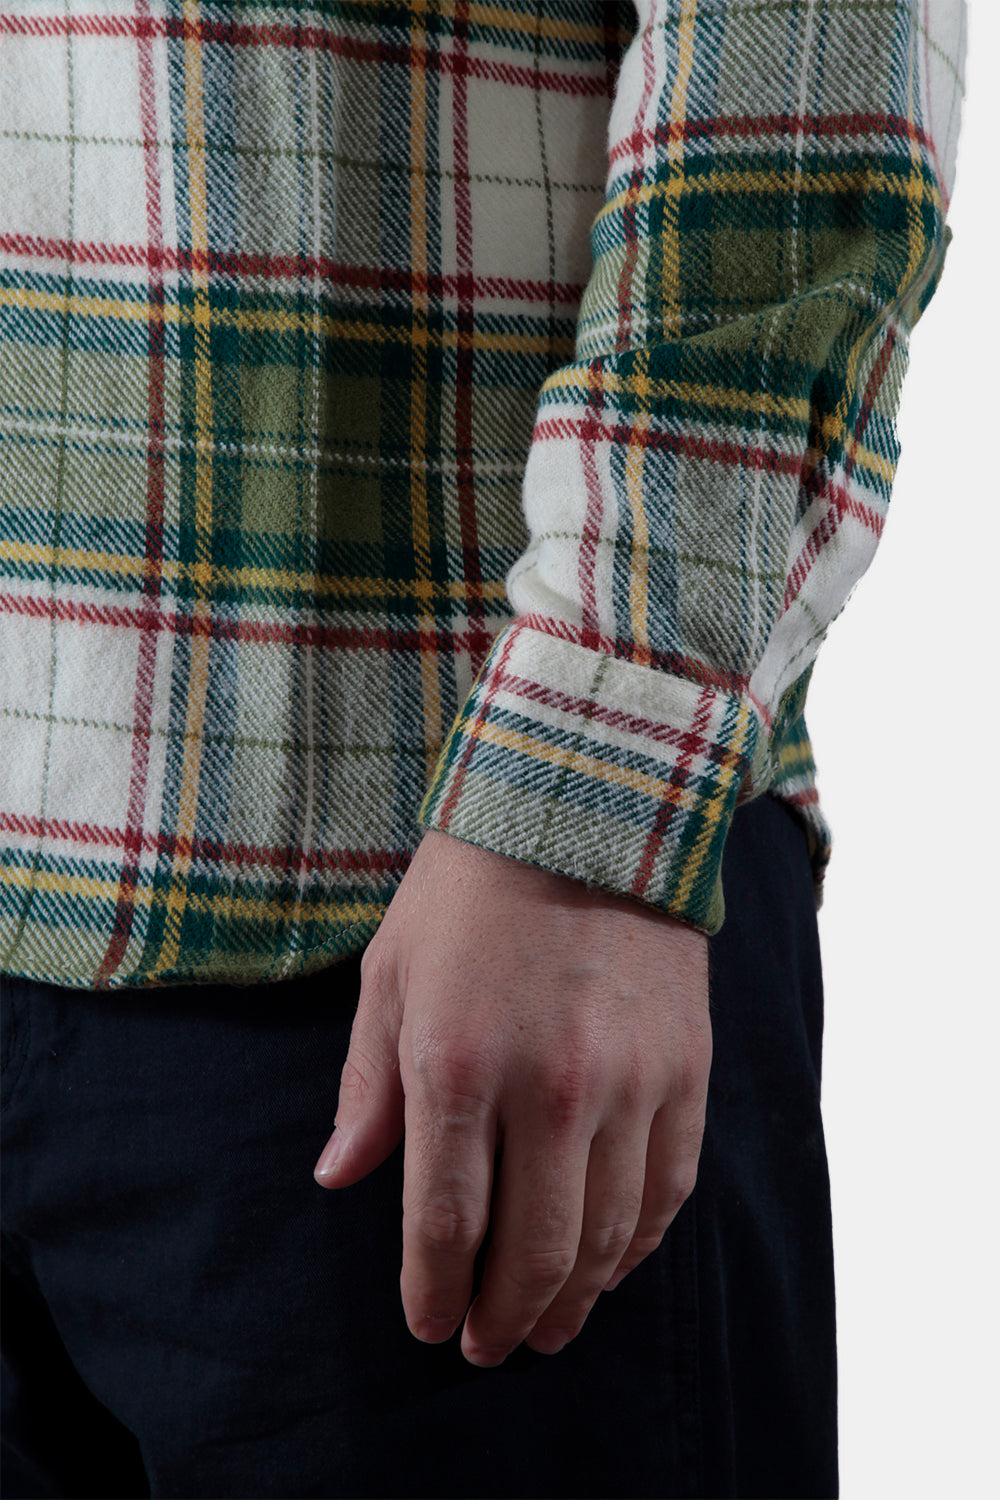 Portuguese Flannel Portlad Check Shirt (Ecru / Green) | Number Six